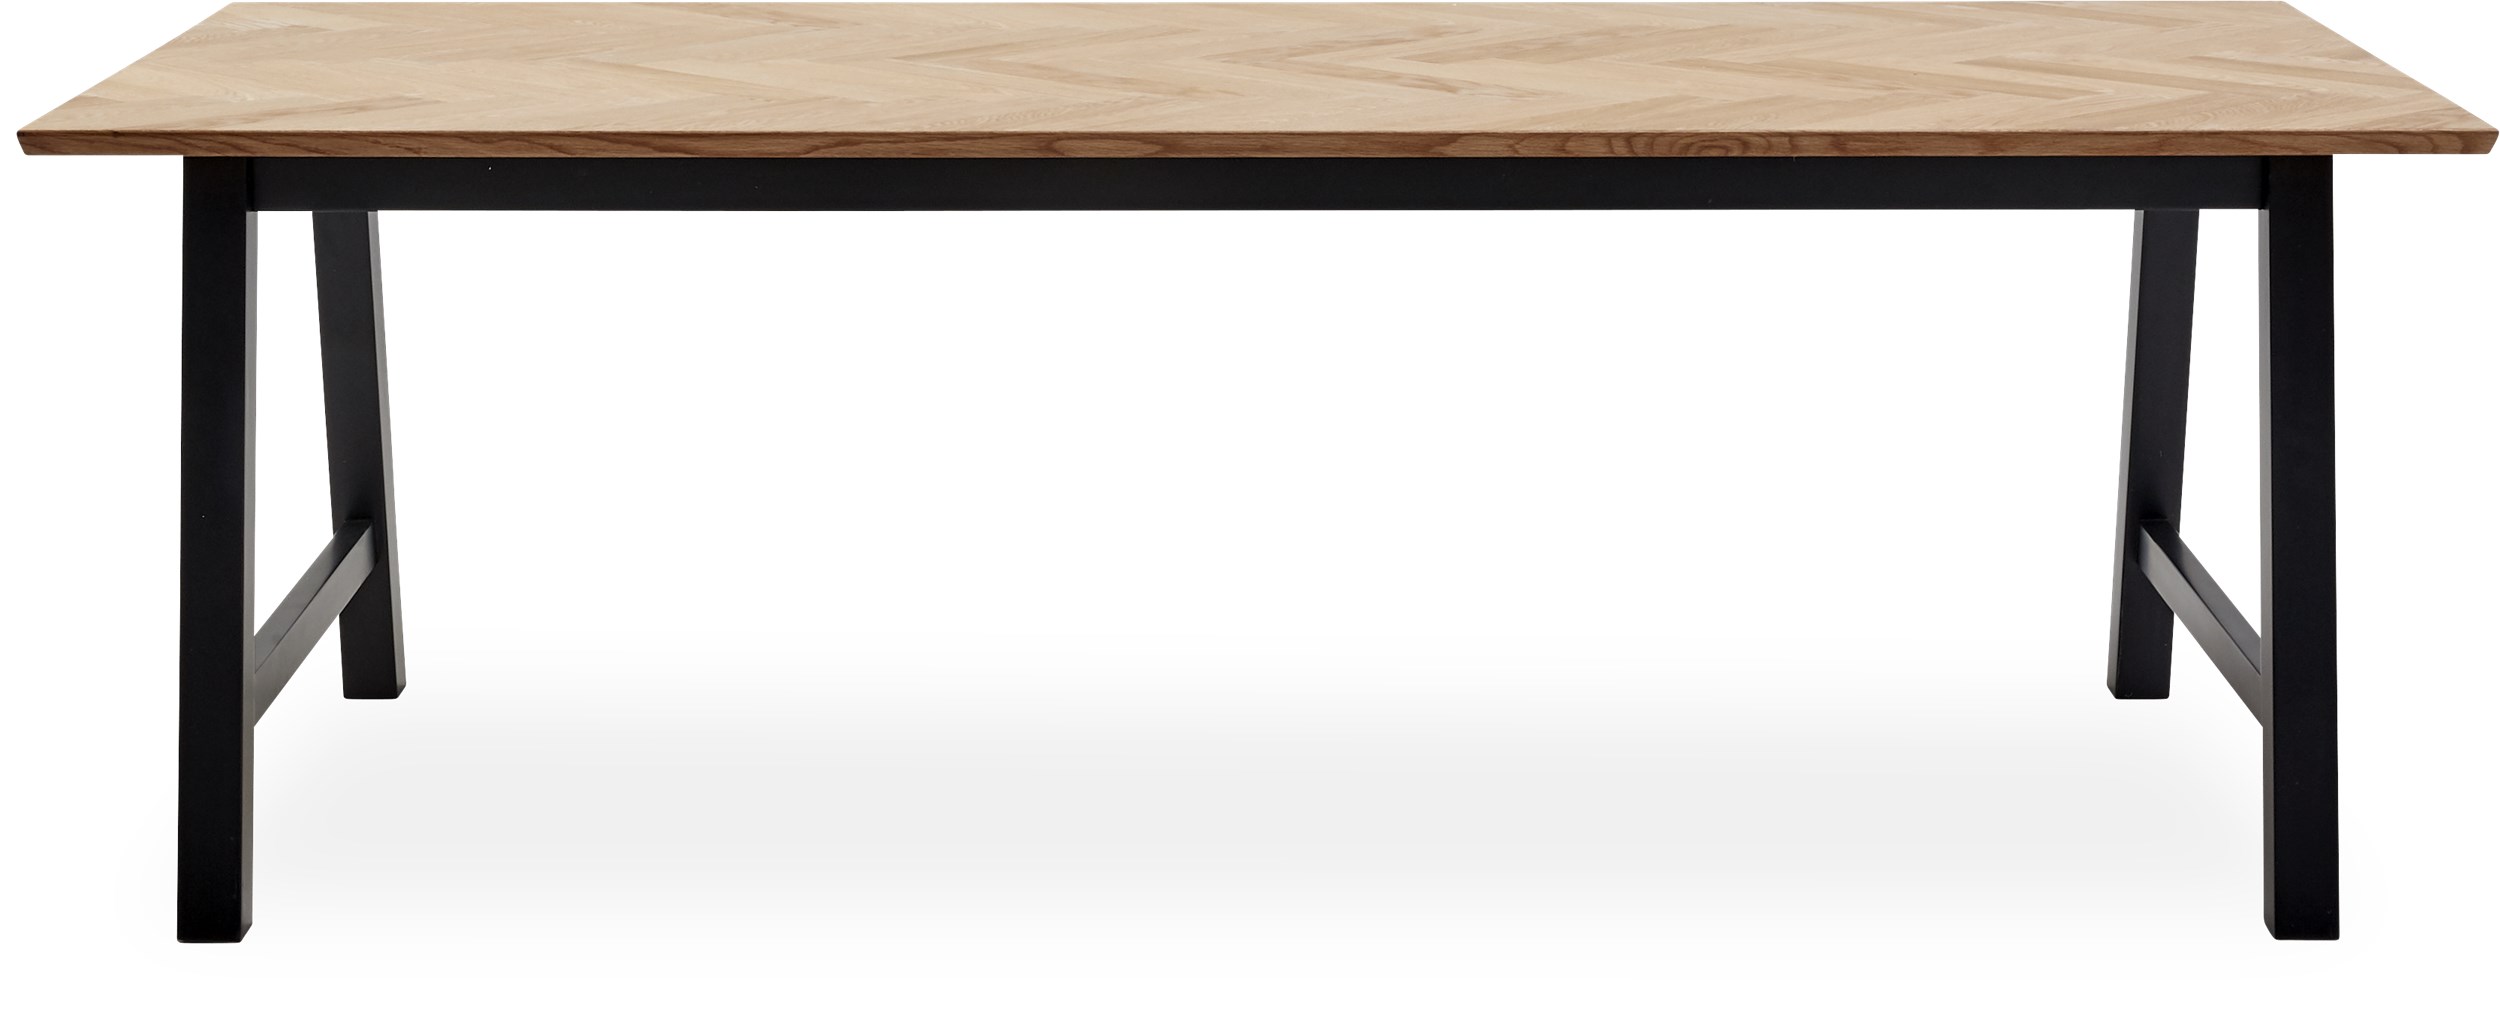 Blixton Spisebord 222 x 95 x 75 cm - bordplade i olieret egefiner og ben i sortmalet MDF